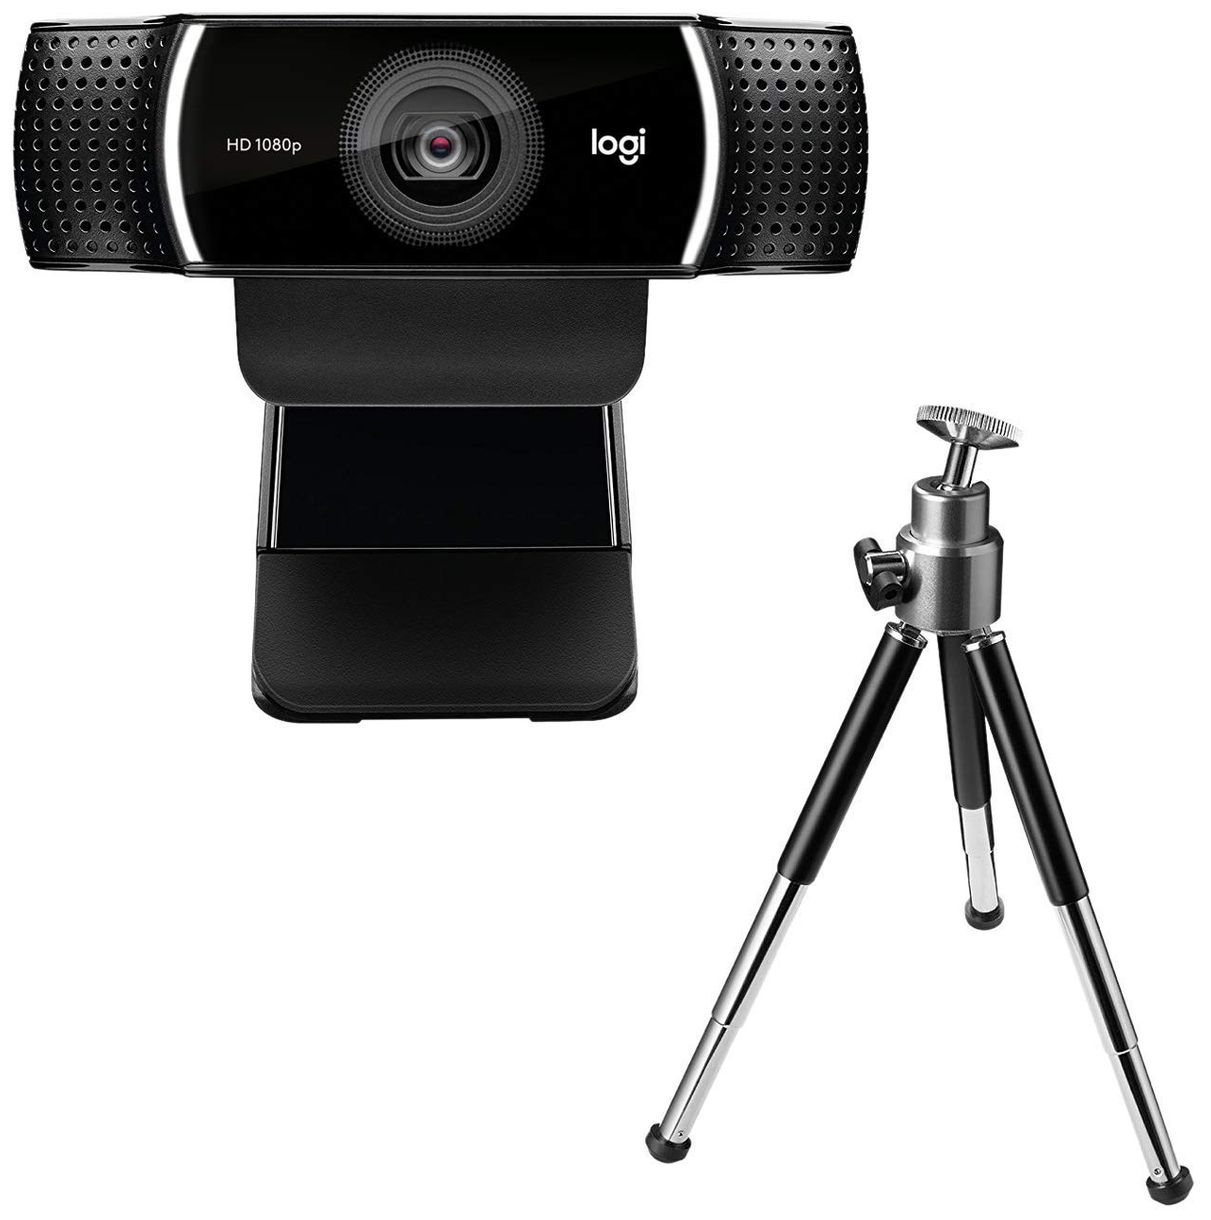 C922 Pro Stream 1080p Full HD 1920 x 1080 Pixel Webcam 